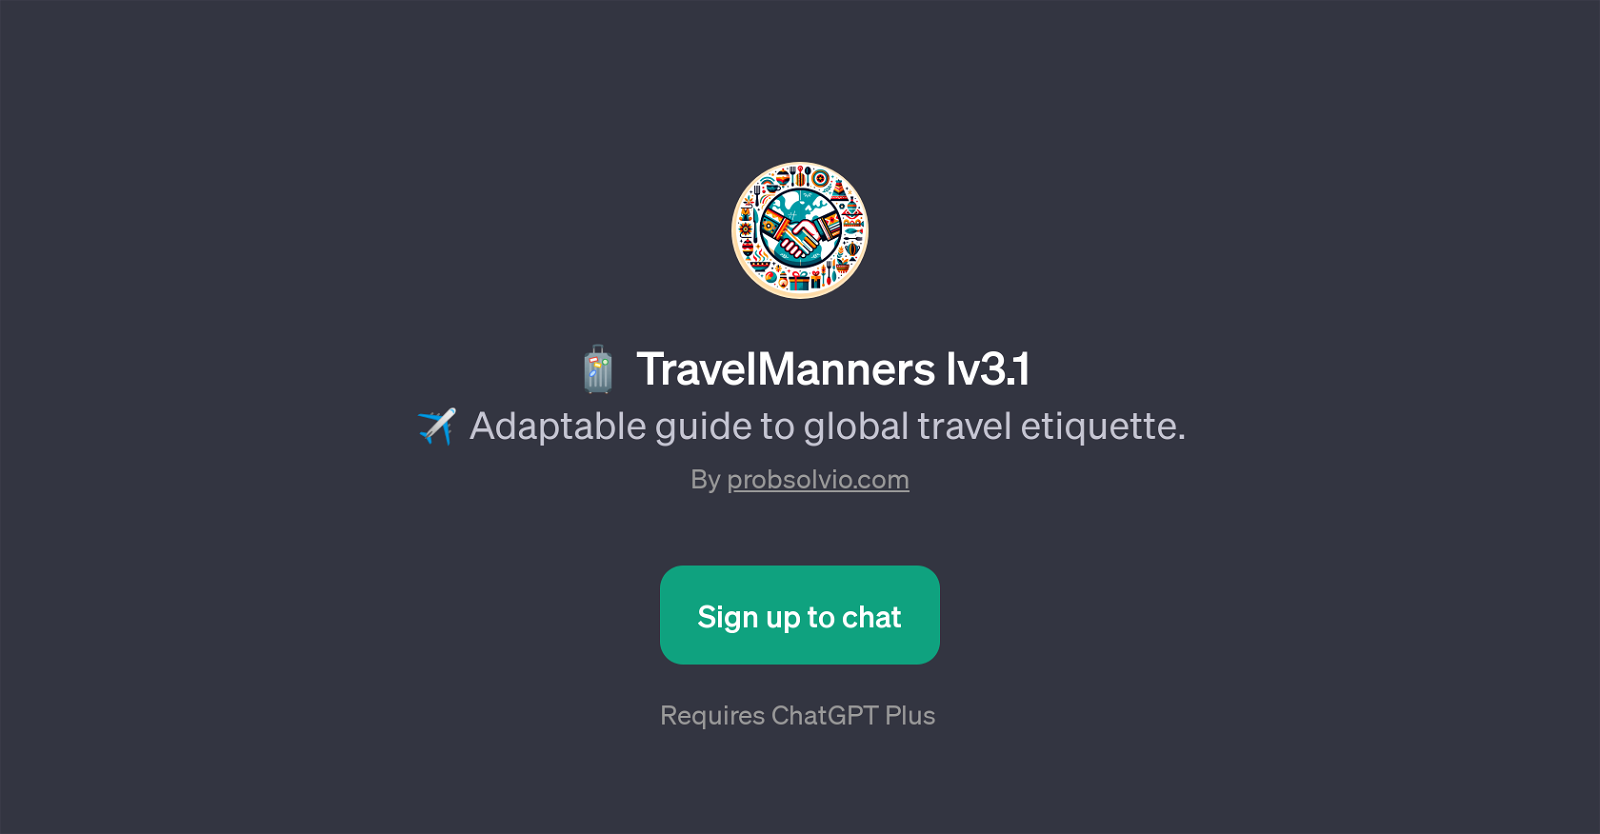 TravelManners lv3.1 website